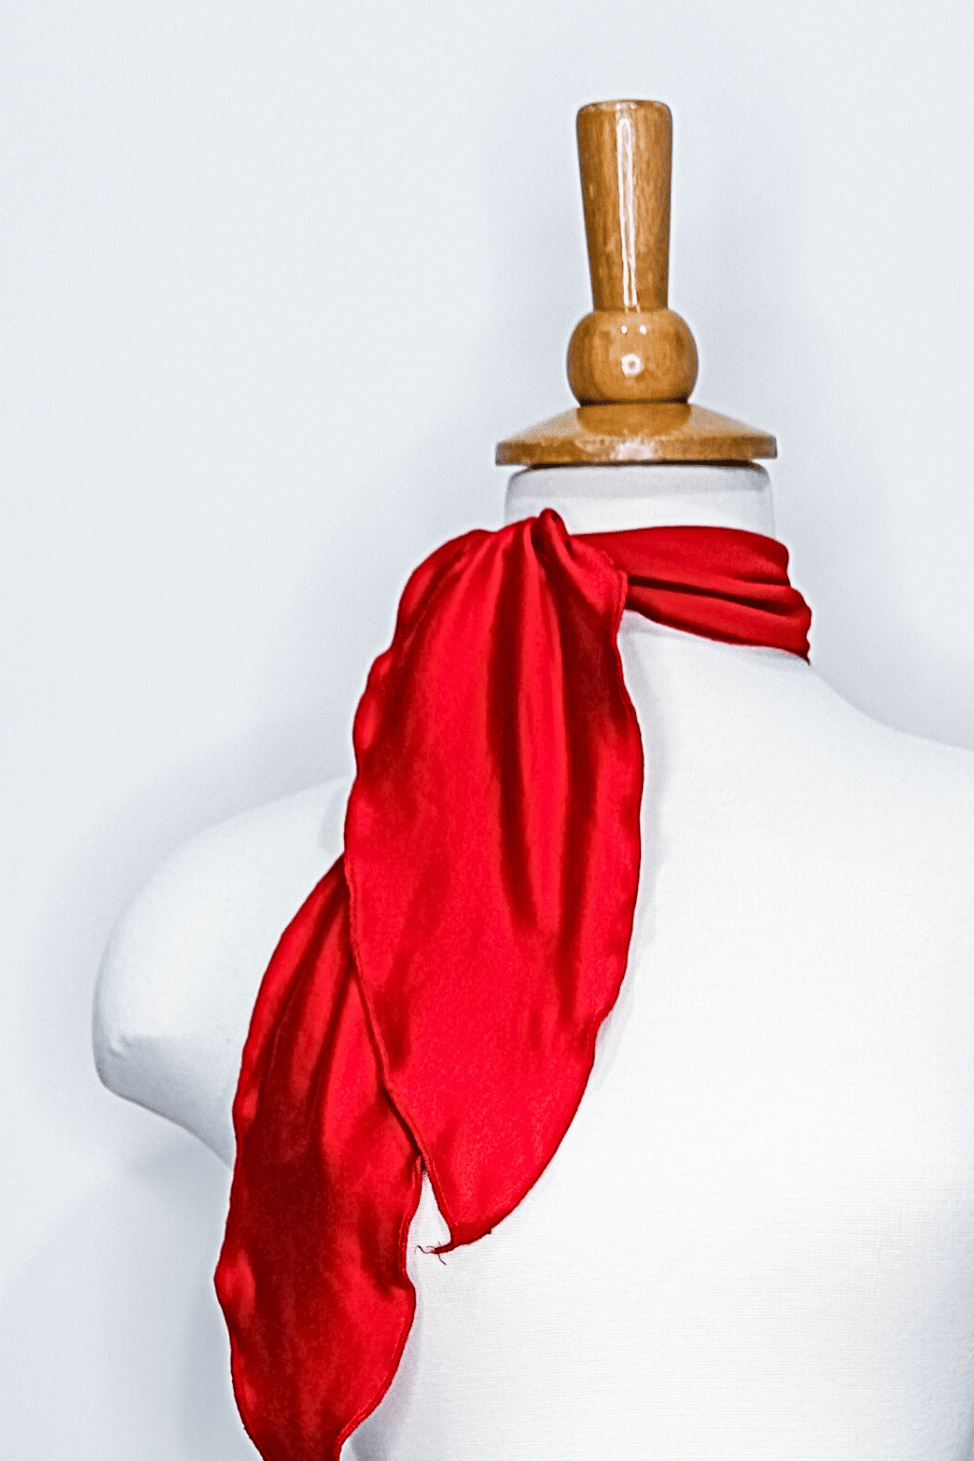 Multiway Tie in Red color from Diane Kroe